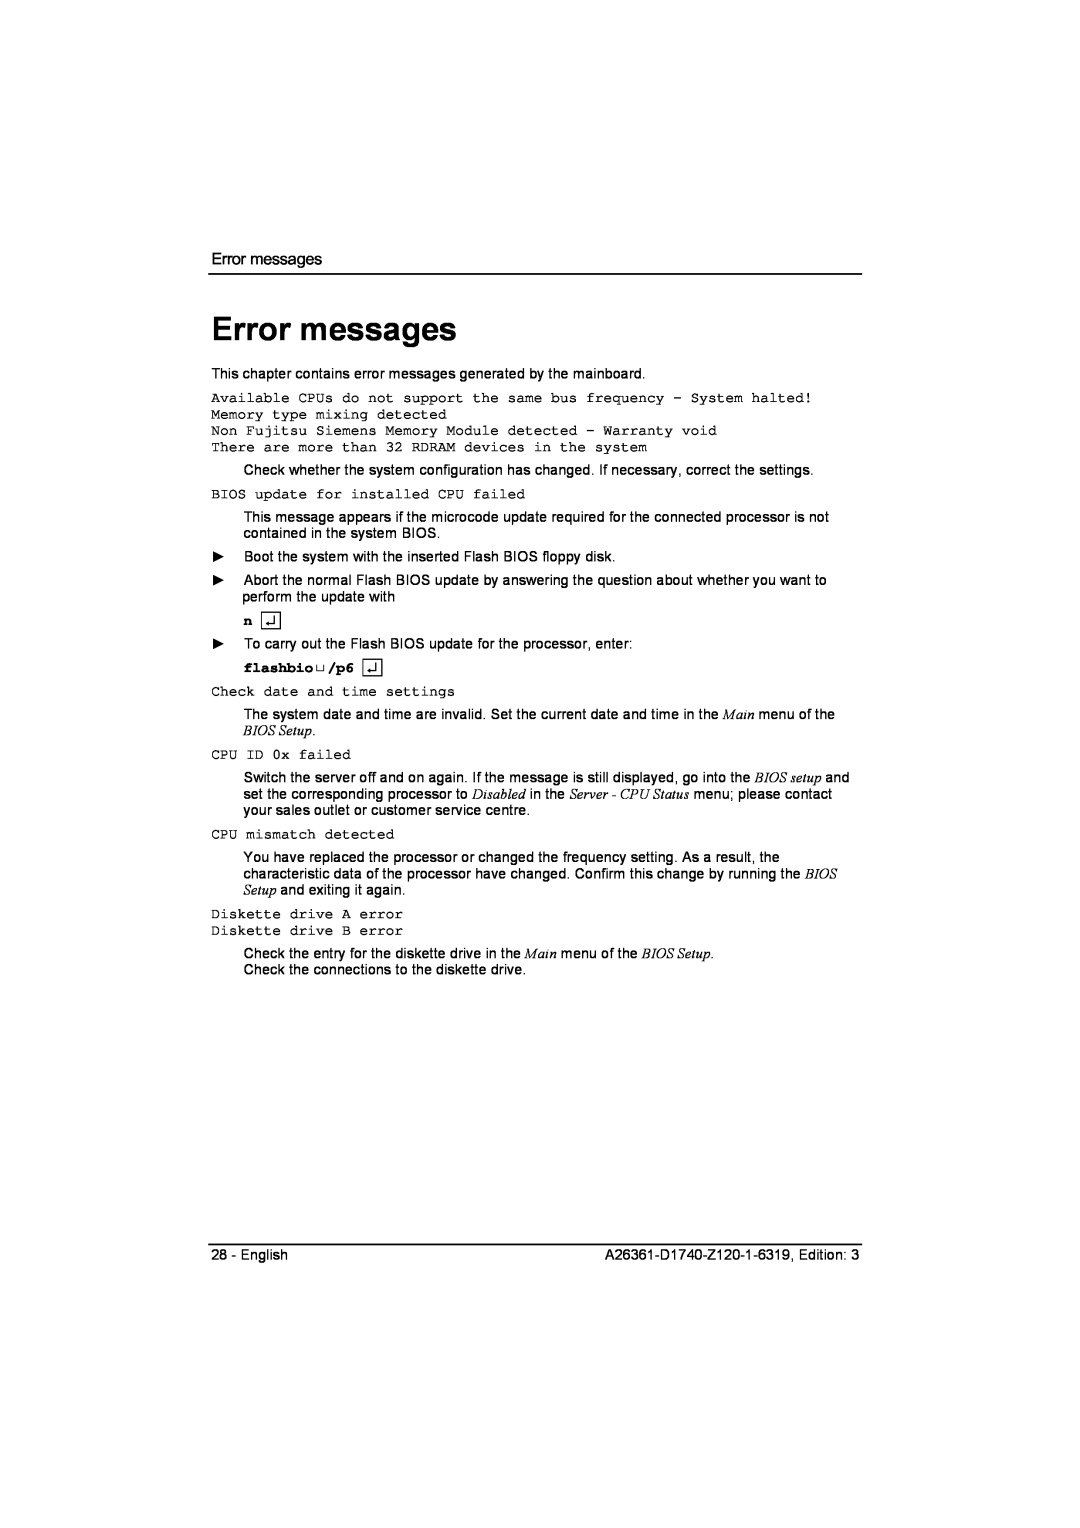 Fujitsu D1740 technical manual Error messages, flashbio/p6 